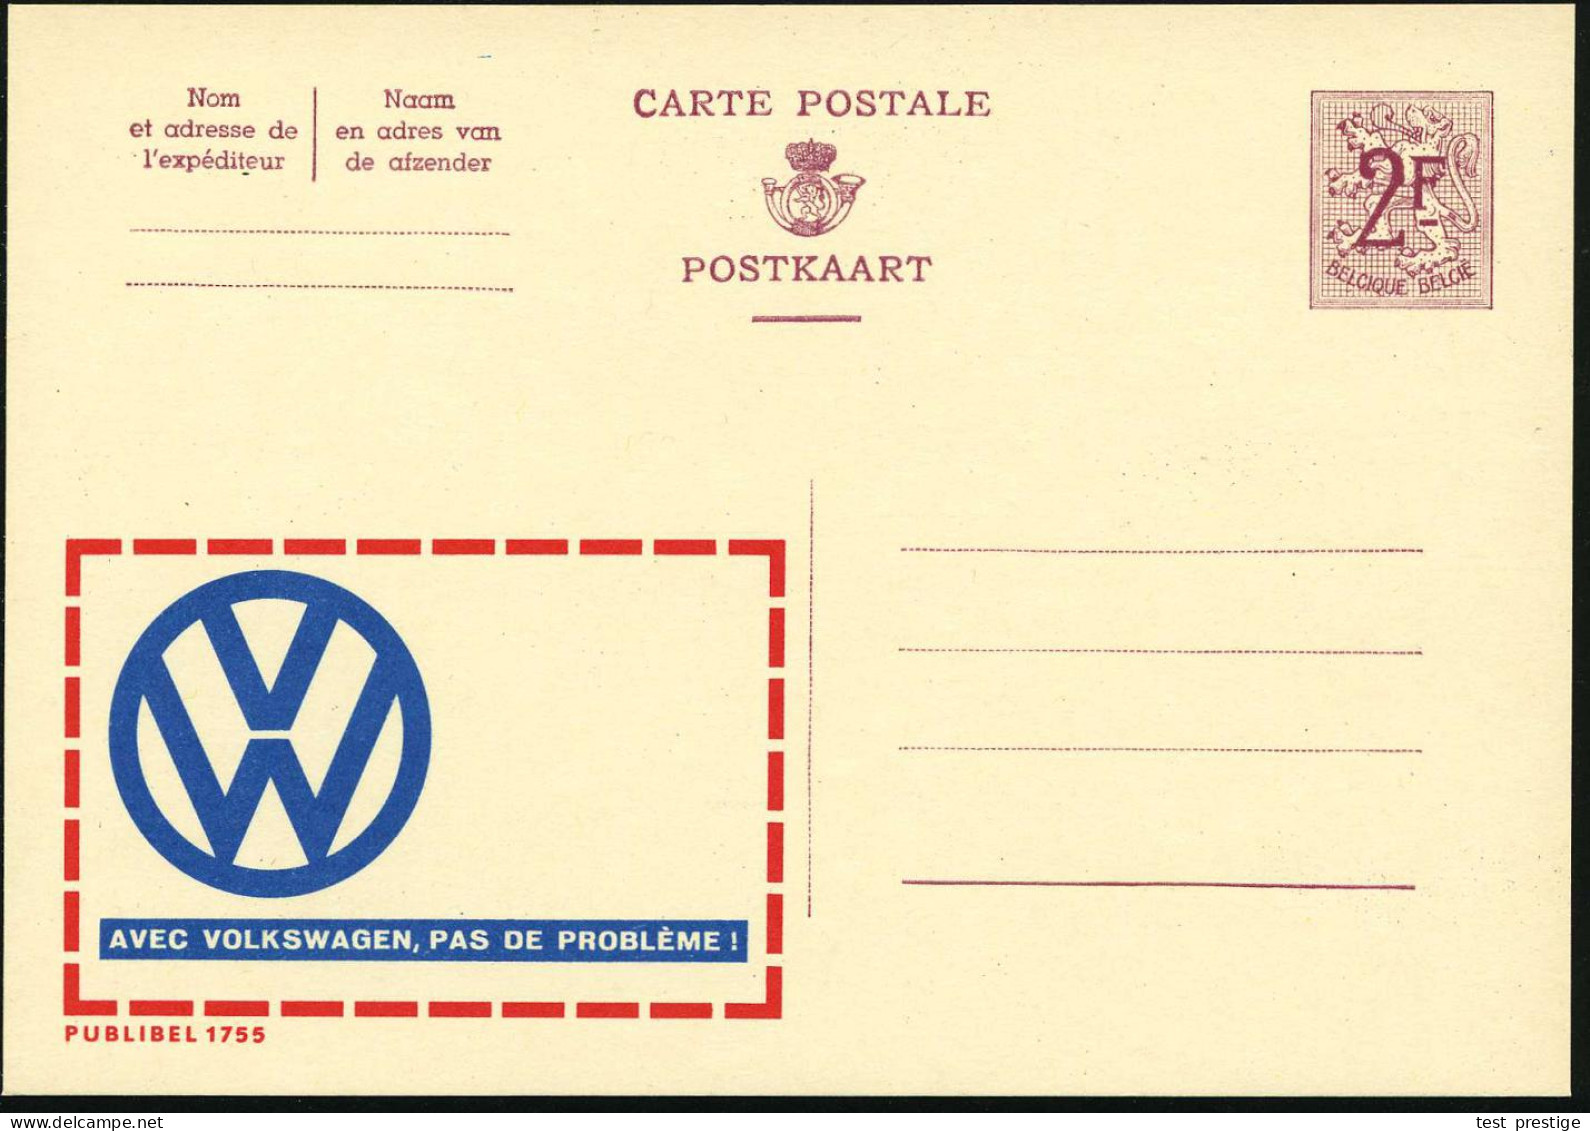 BELGIEN 1959 2 F. Reklame-P., Löwe, Weinrot: VW, AVEC VOLKSWAGEN, PAS DE PROBLEME! = VW-Logo , Französ. Text, Ungebr. (M - Cars